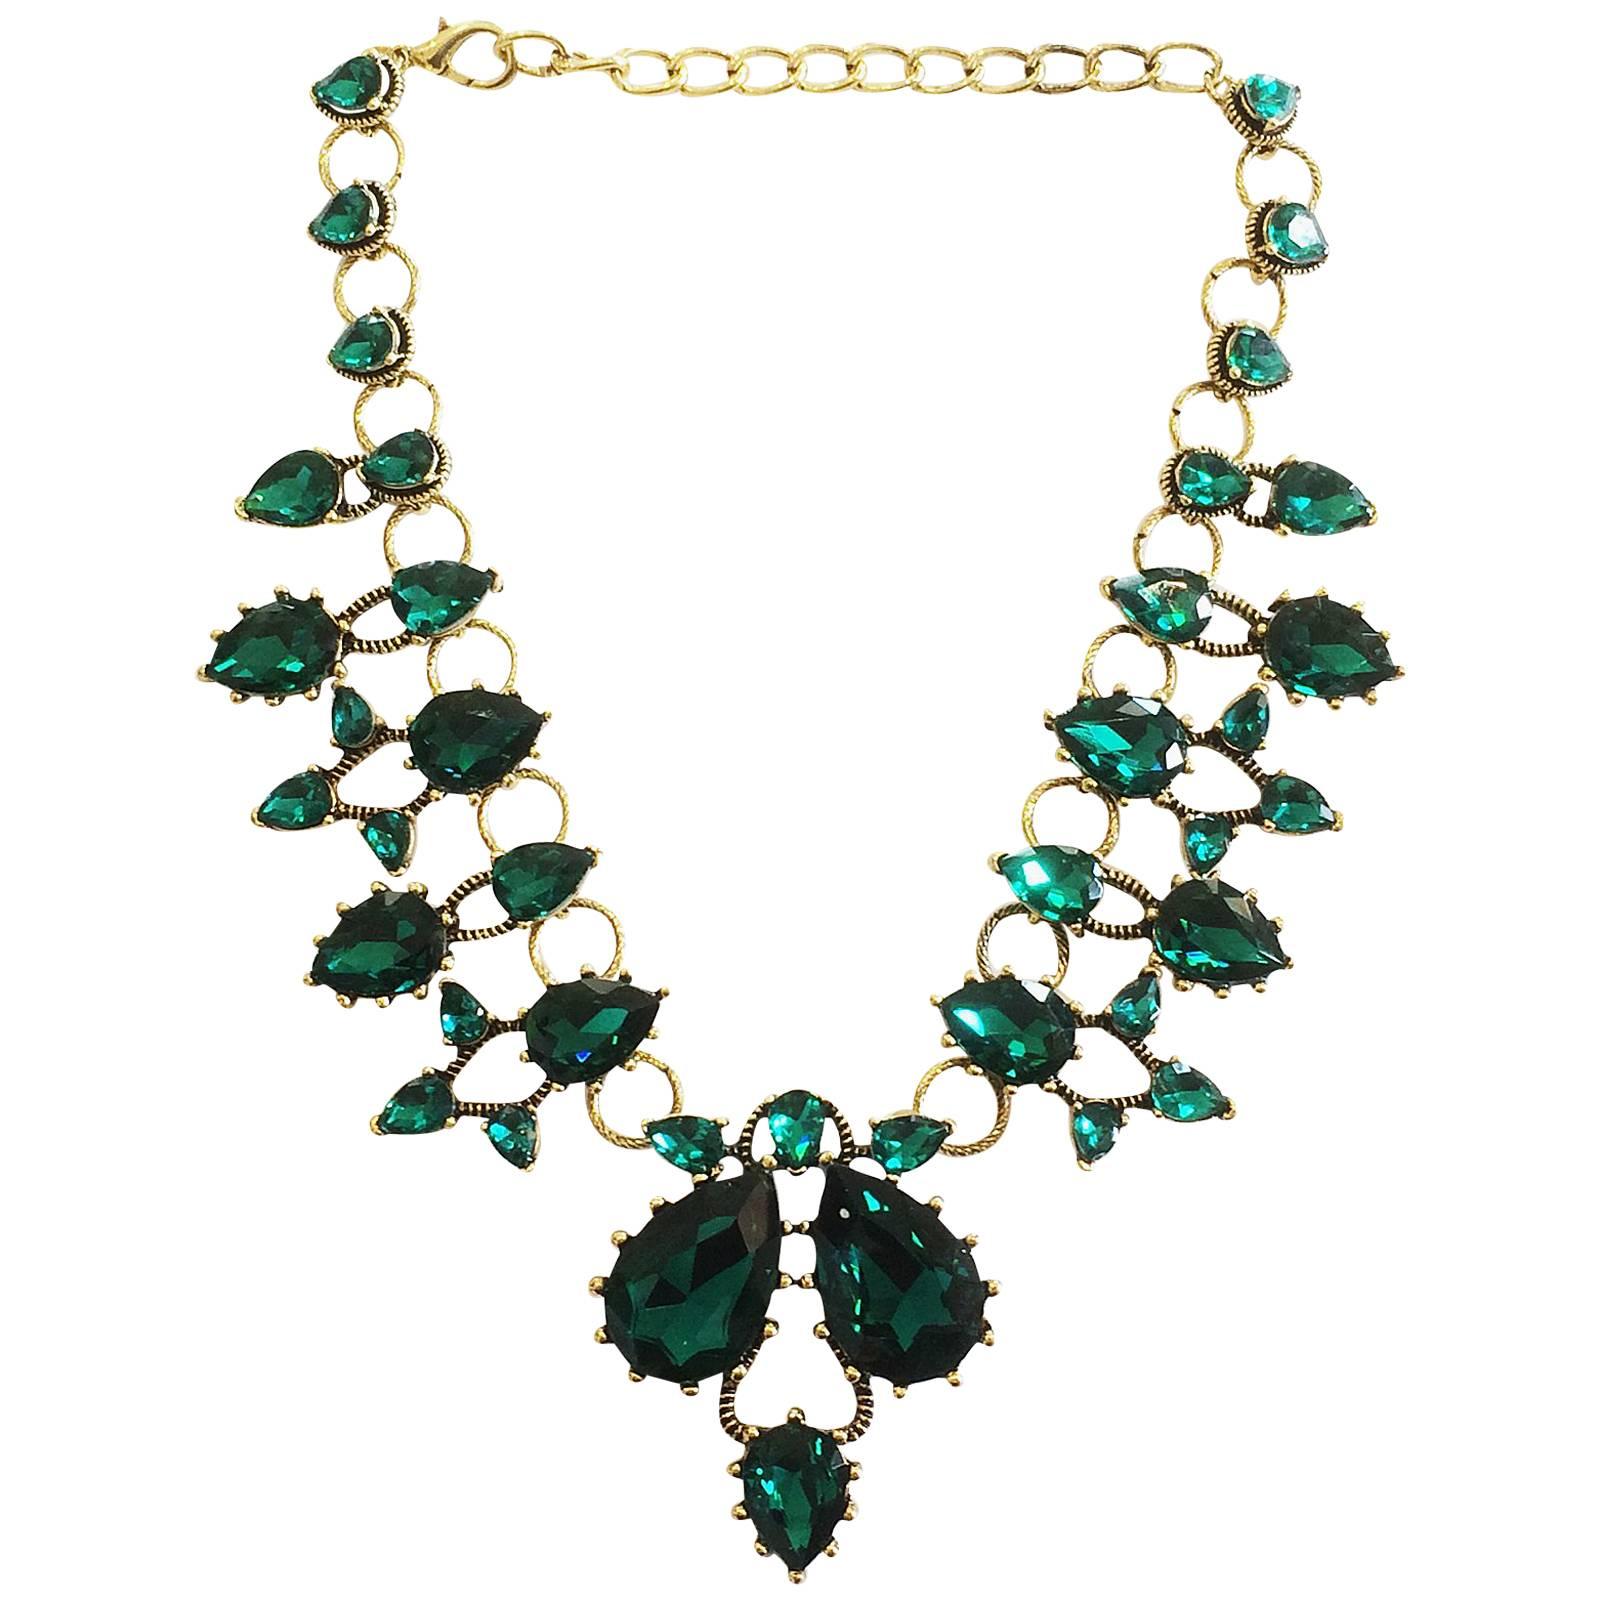 Designer Oscar de la Renta standout emerald green glass necklace 